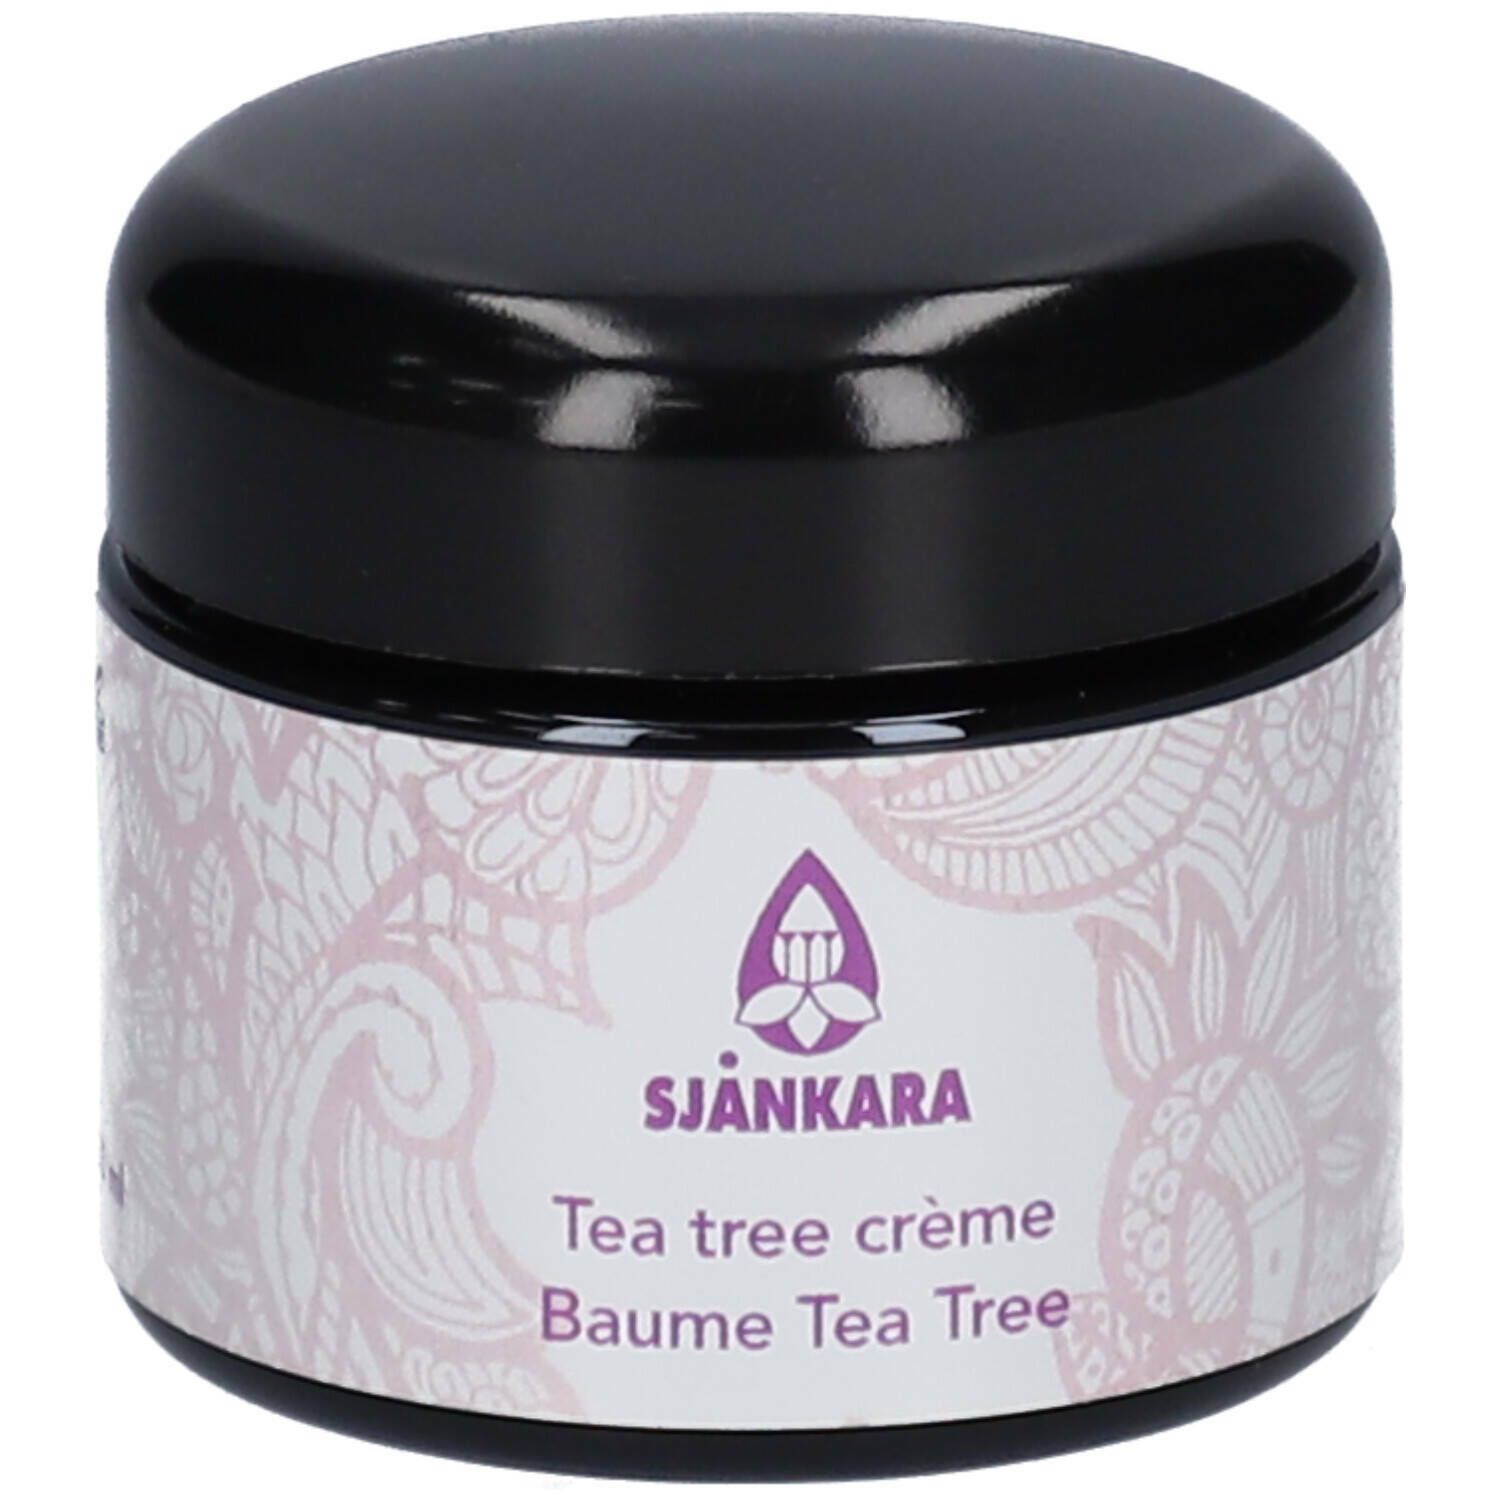 Sjankara Baume Tea Tree